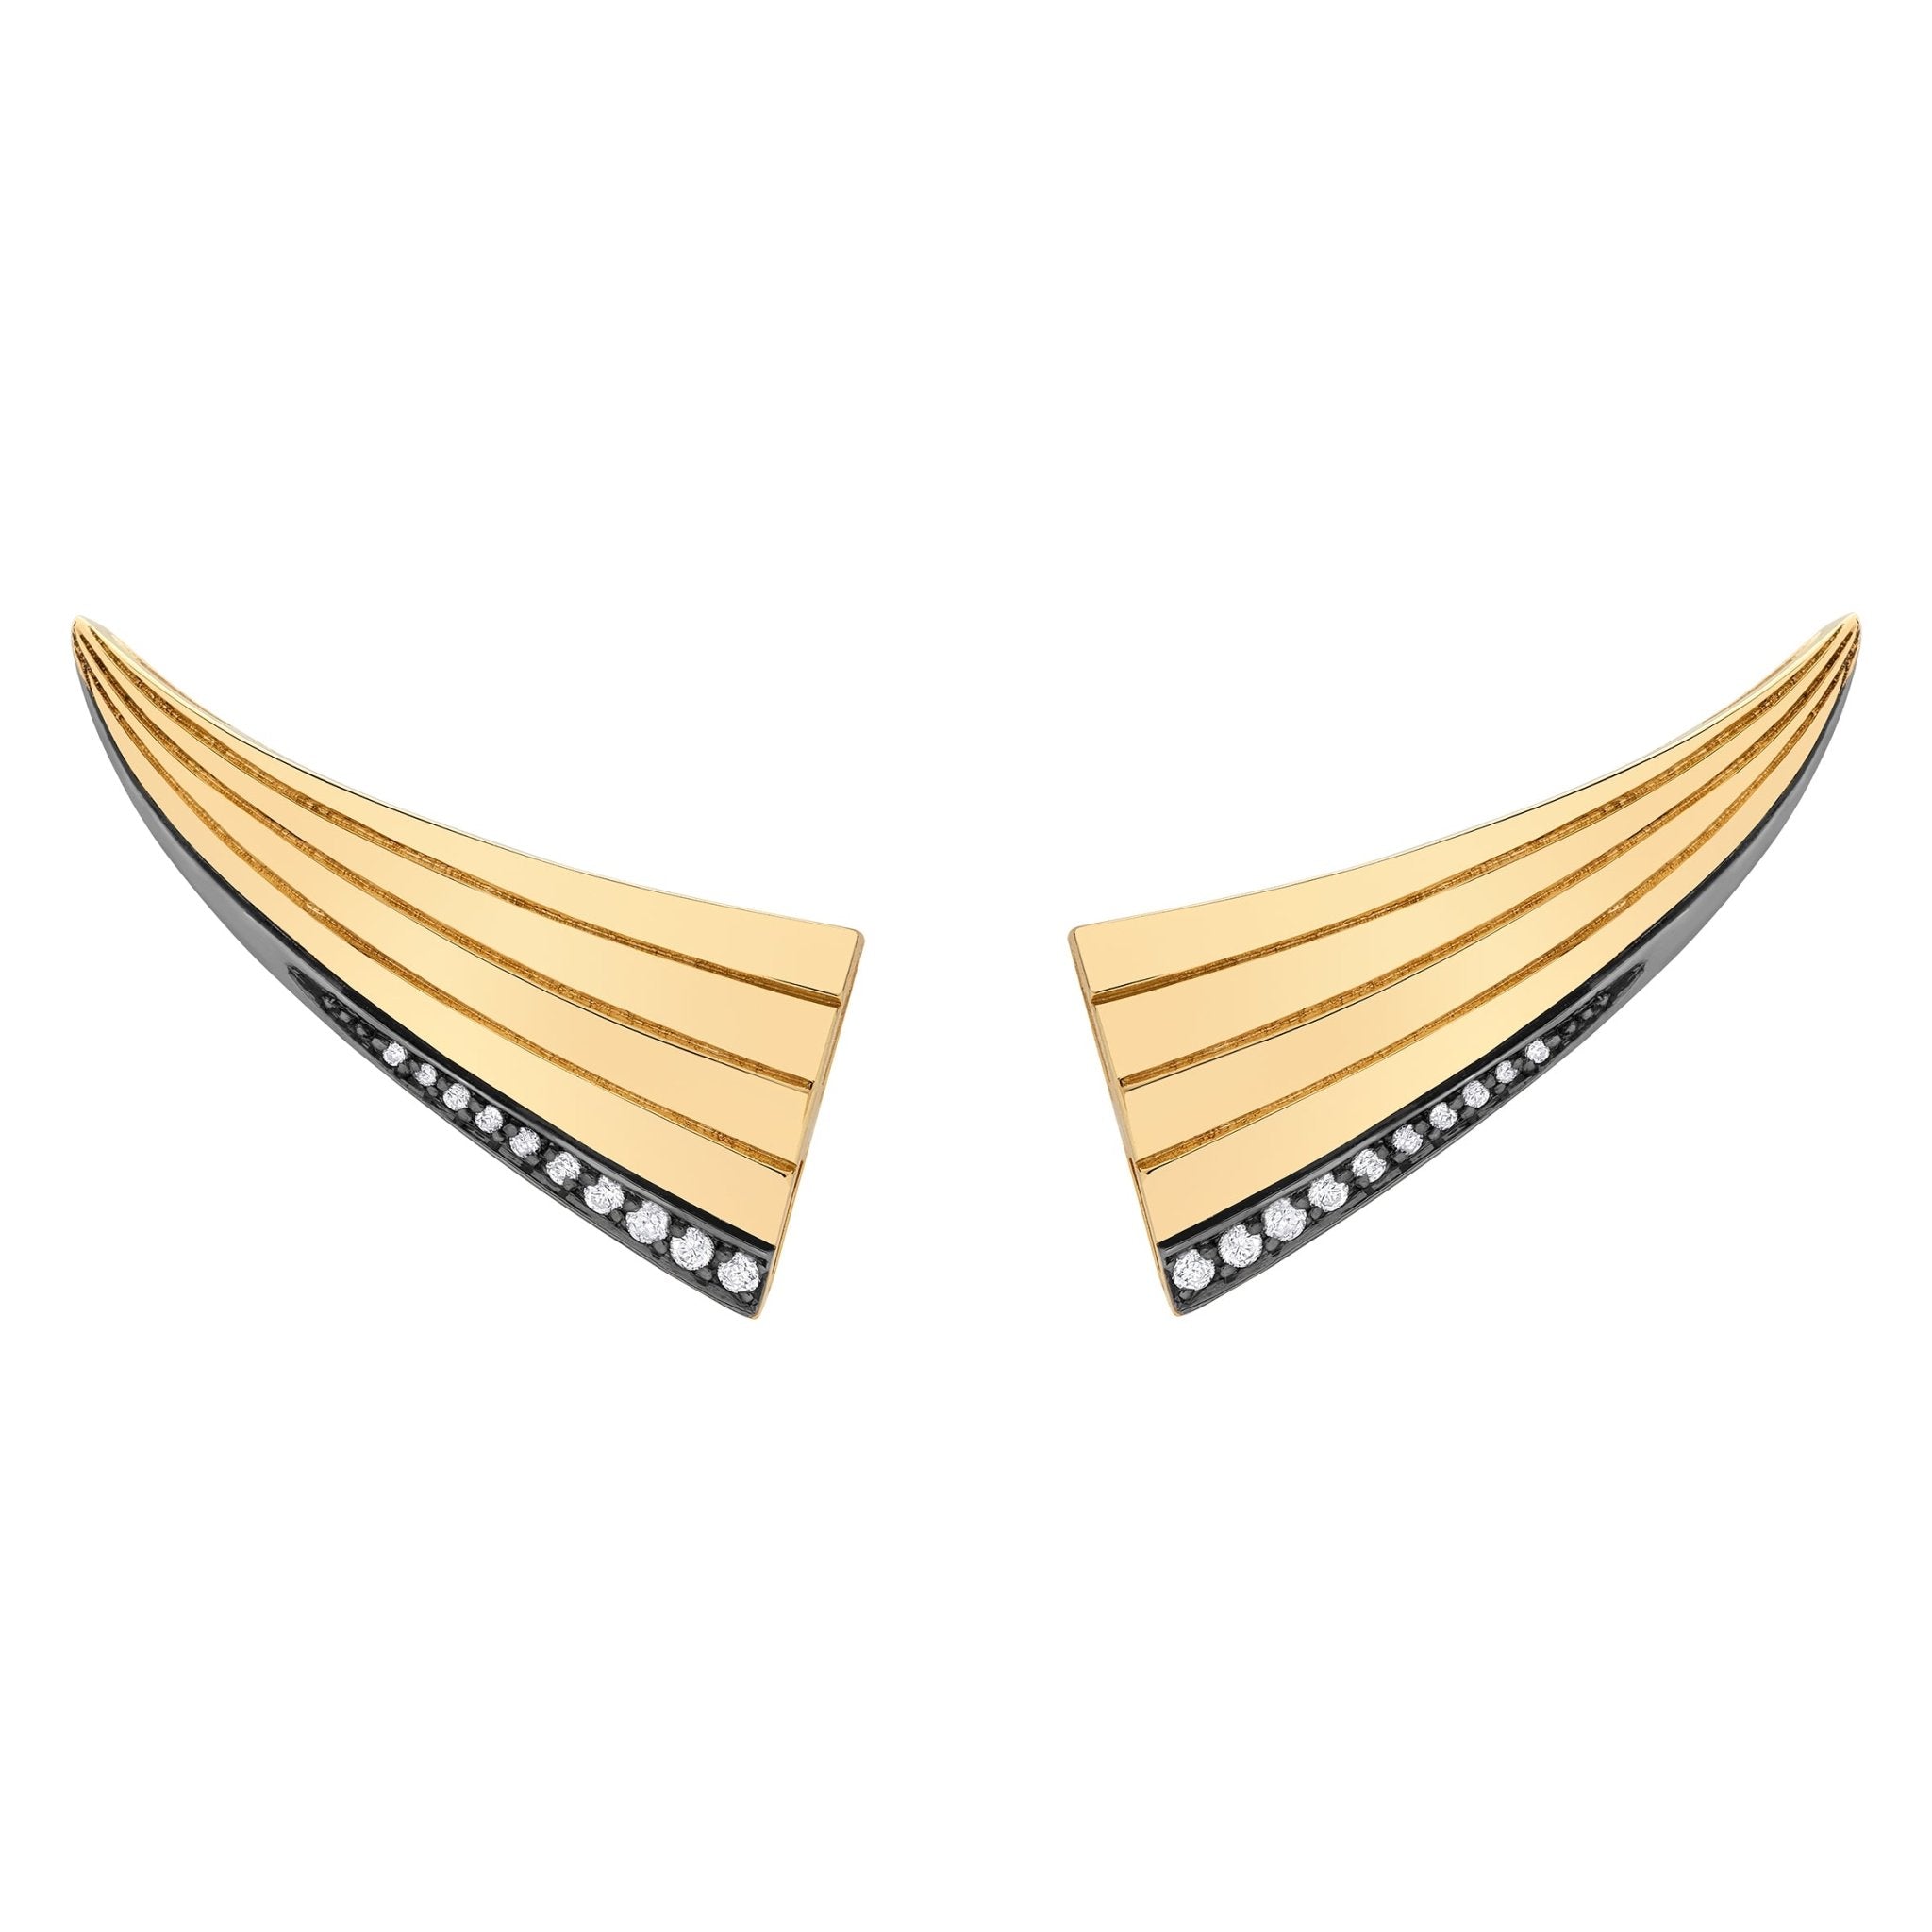 Brinco Ear Cuff Deco 2019 | Ouro Amarelo 18K com ródio negro E Diamantes - Jack Vartanian - Ear Cuffs